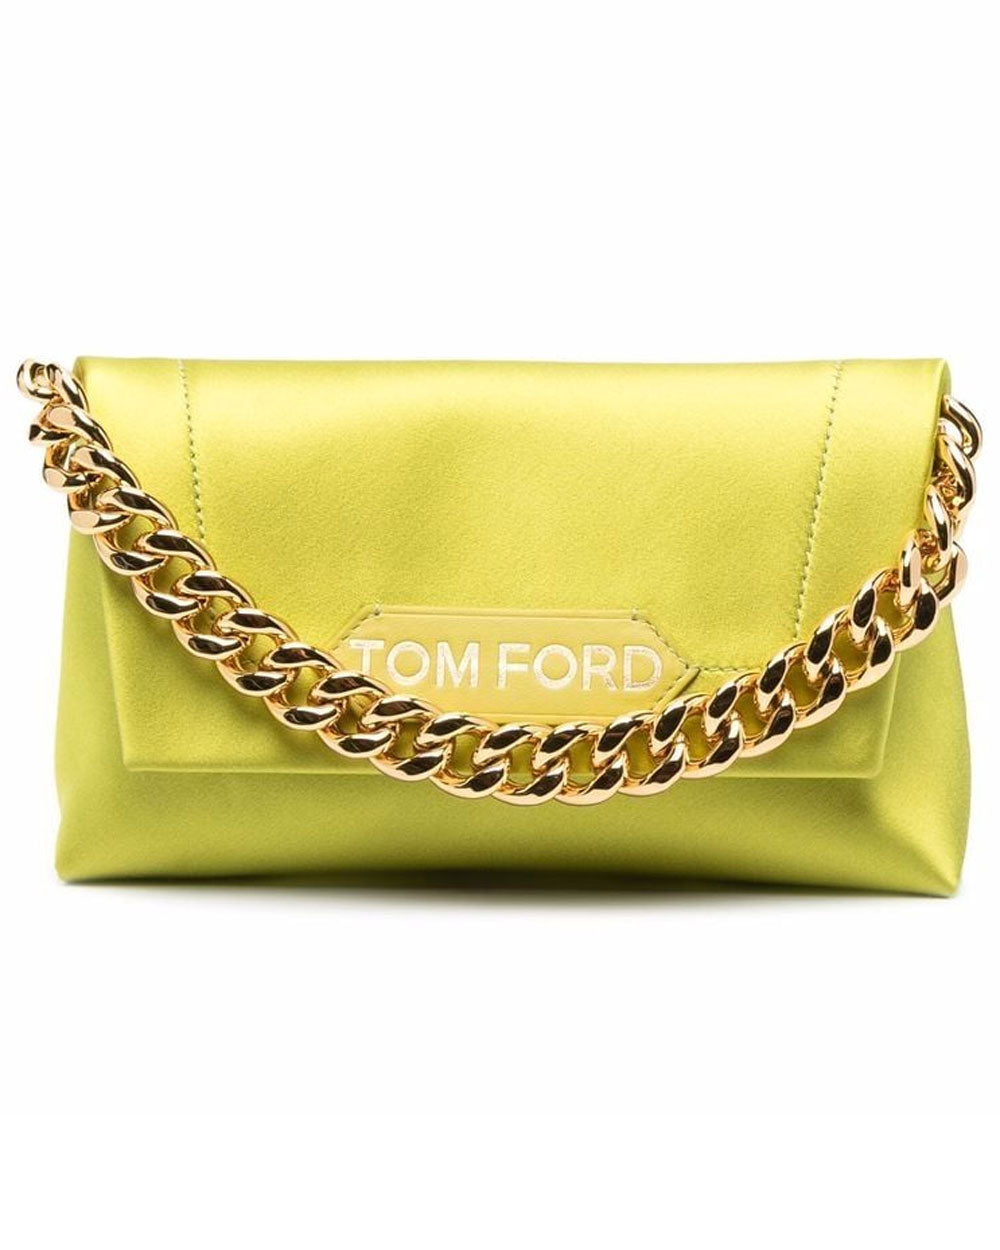 Tom Ford Satin Mini Chain Shoulder Bag in Pistachio – Stanley Korshak